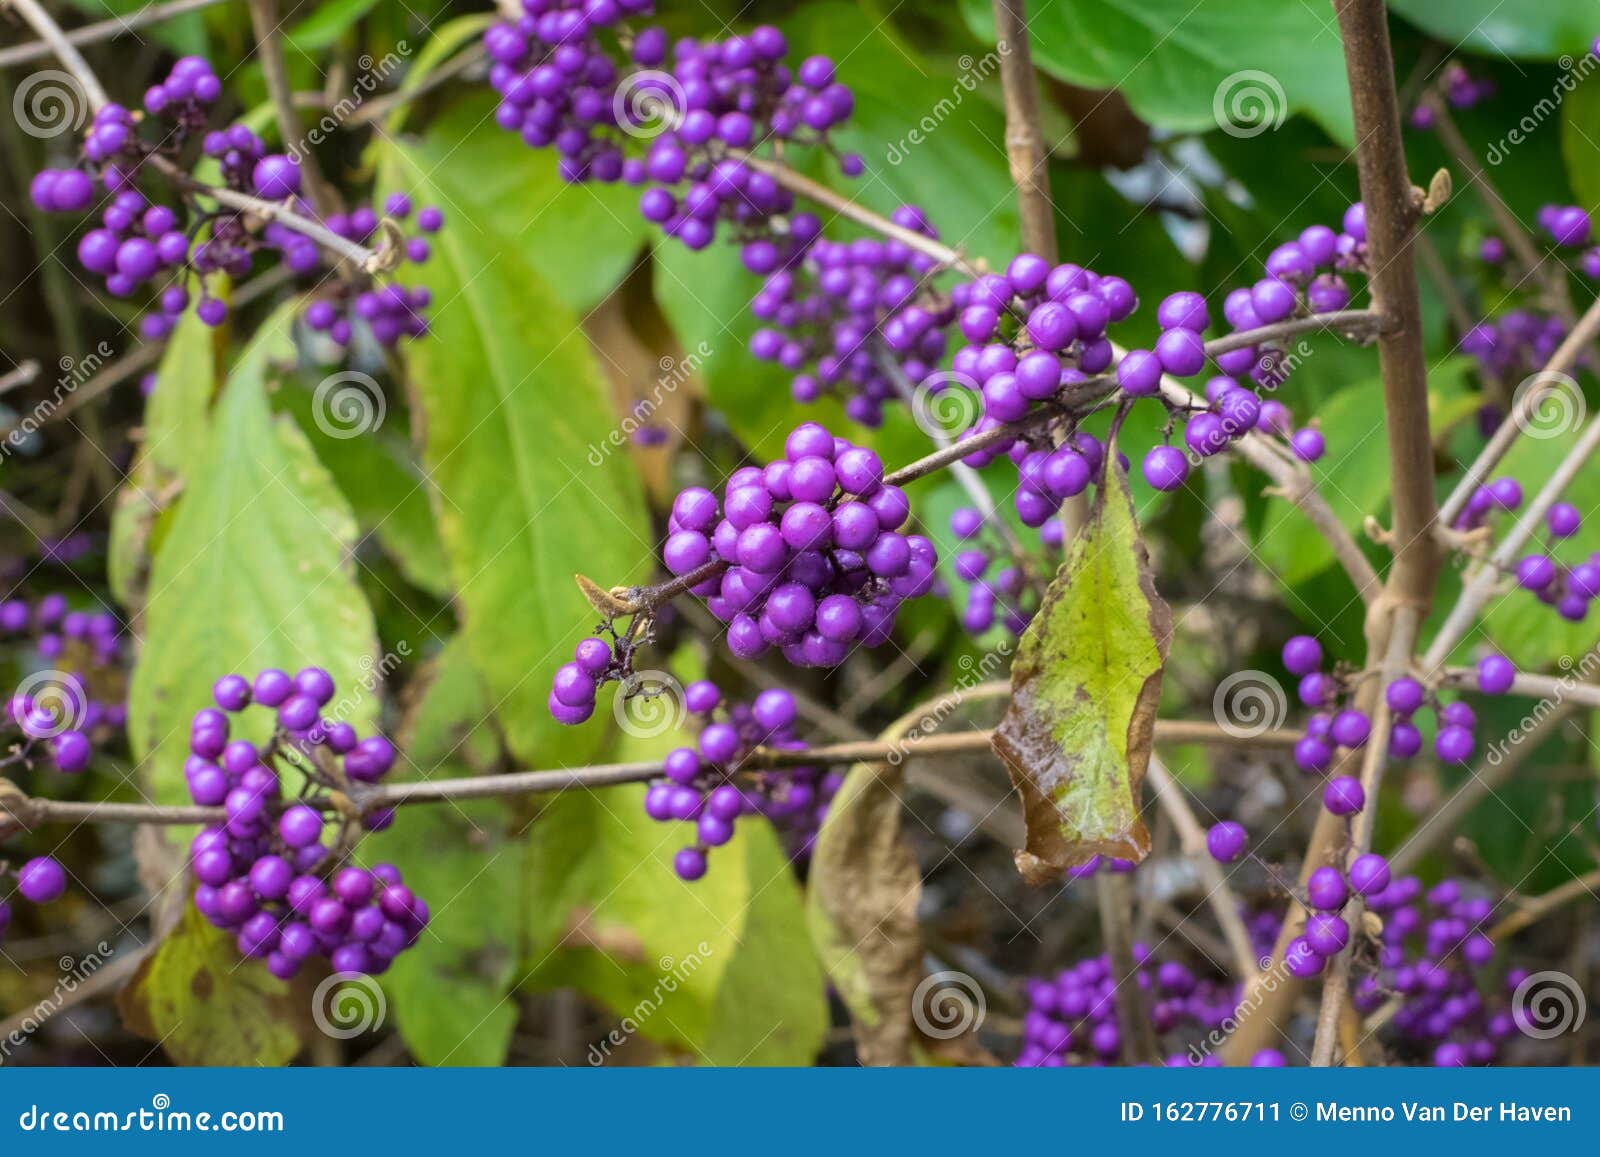 purple berries of american beautyberry or callicarpa americana